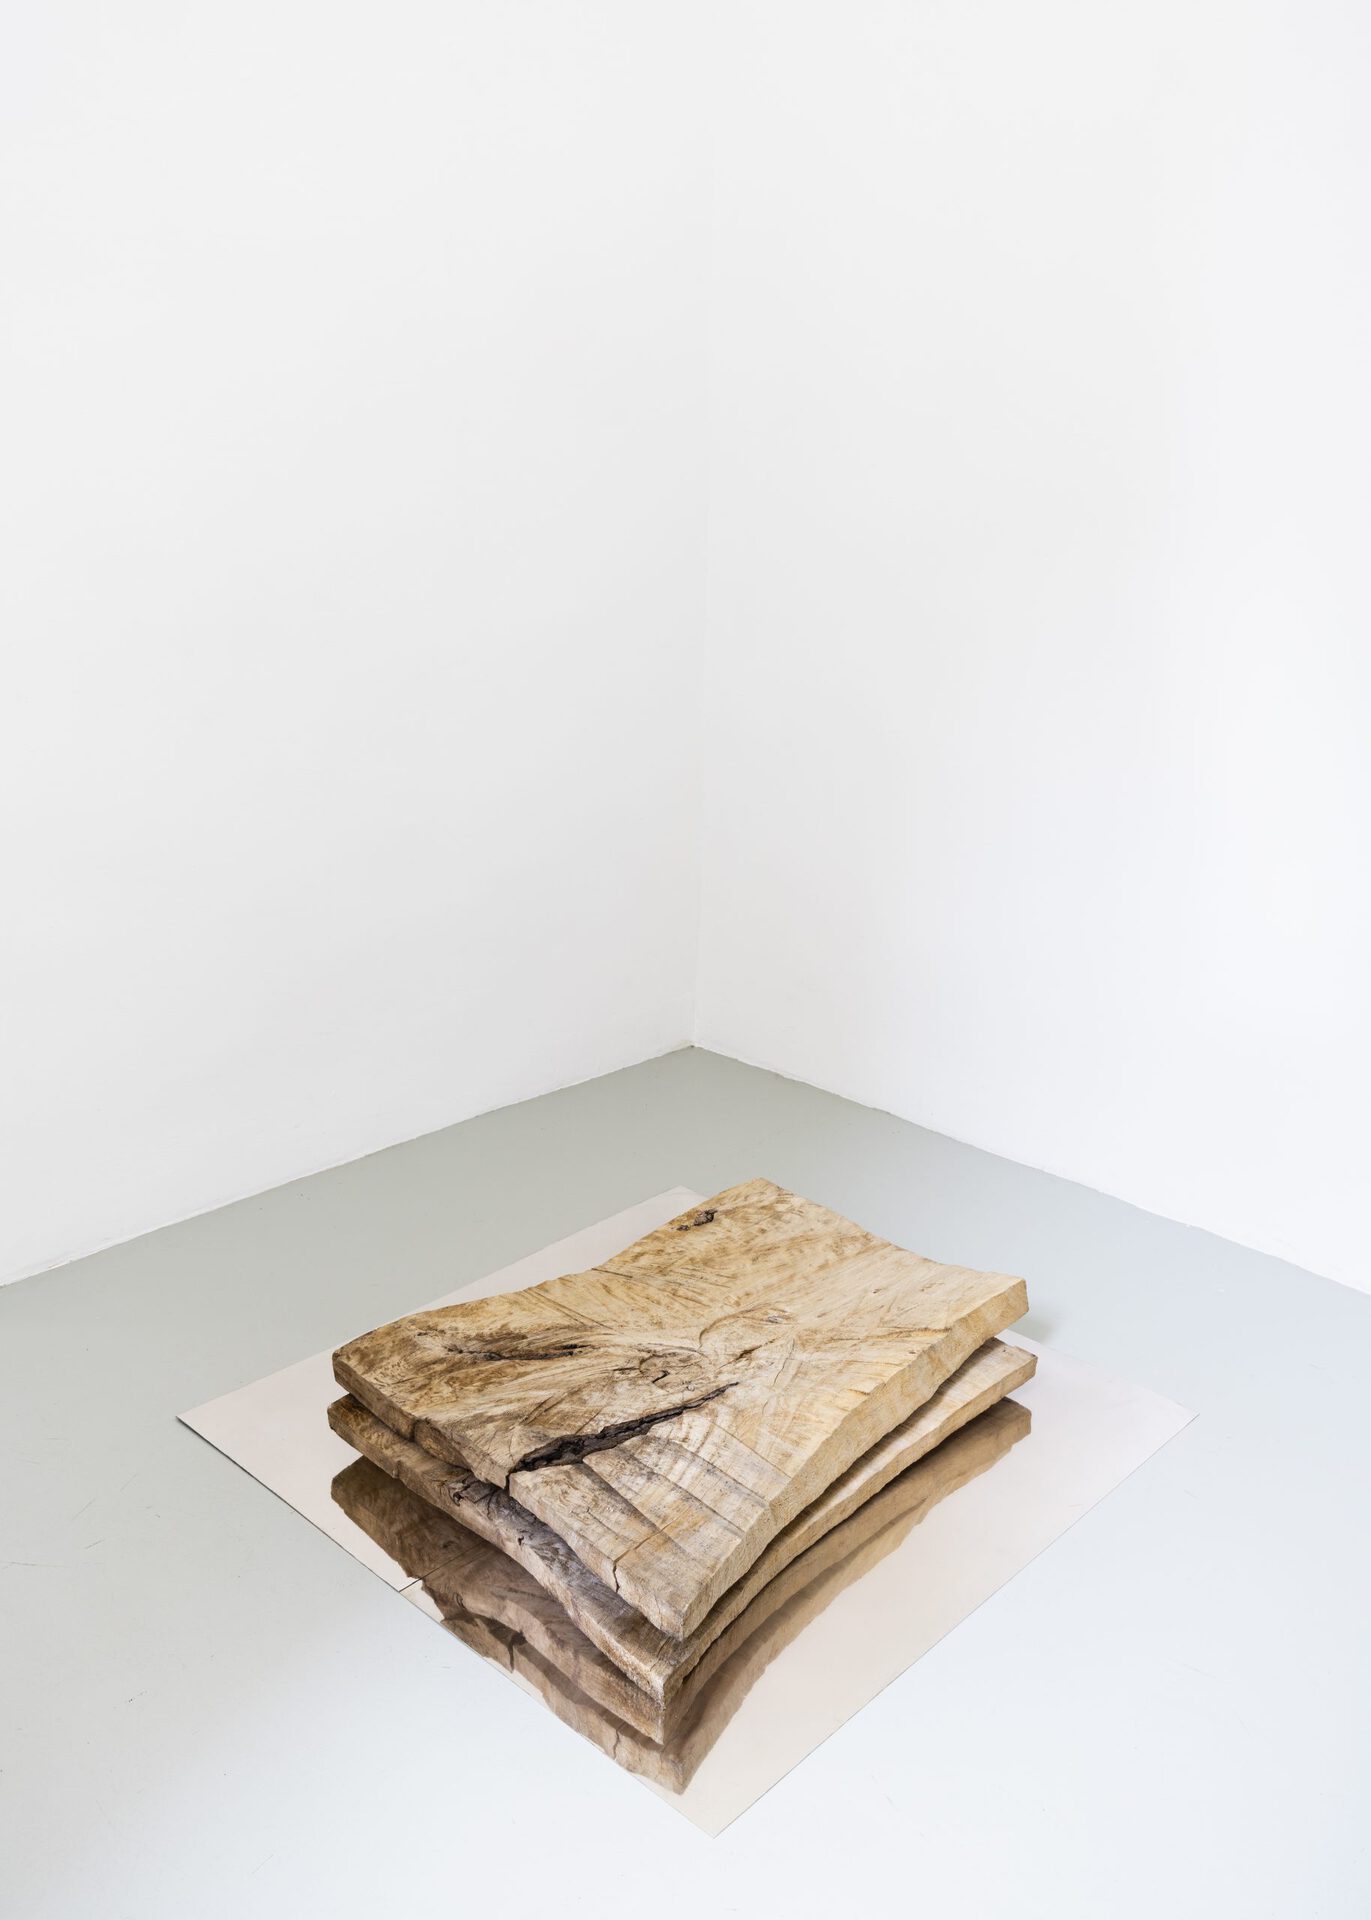 Bernhard Walter, ›Zwei oder Beide‹, poplar wood and silver, approx. 100 x 100 x 20 cm, 2021